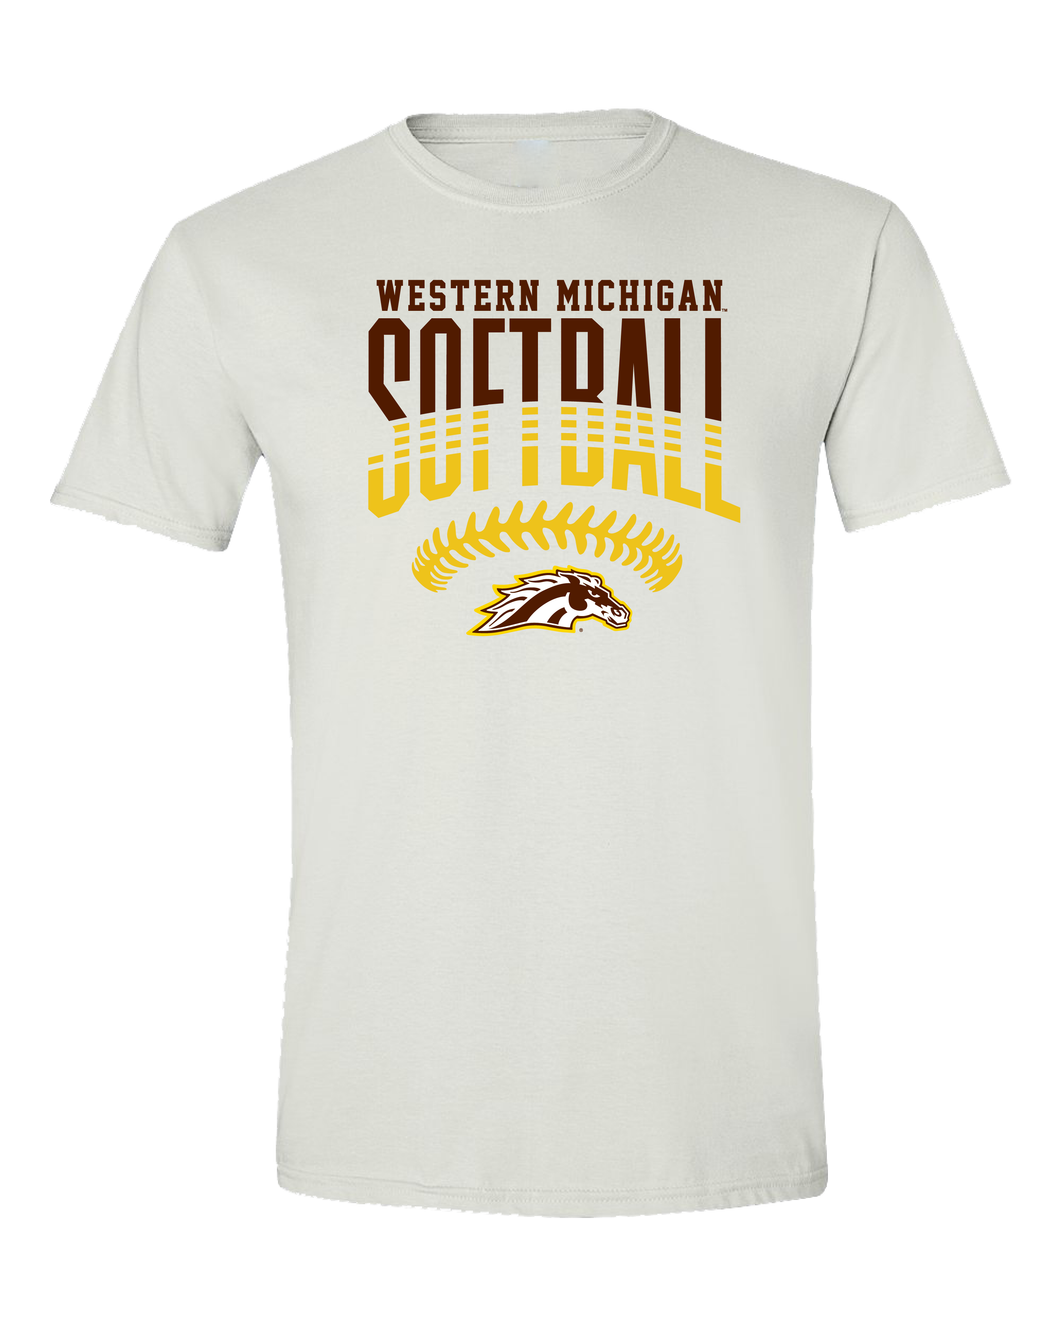 Western Michigan Softball Unisex T-shirt